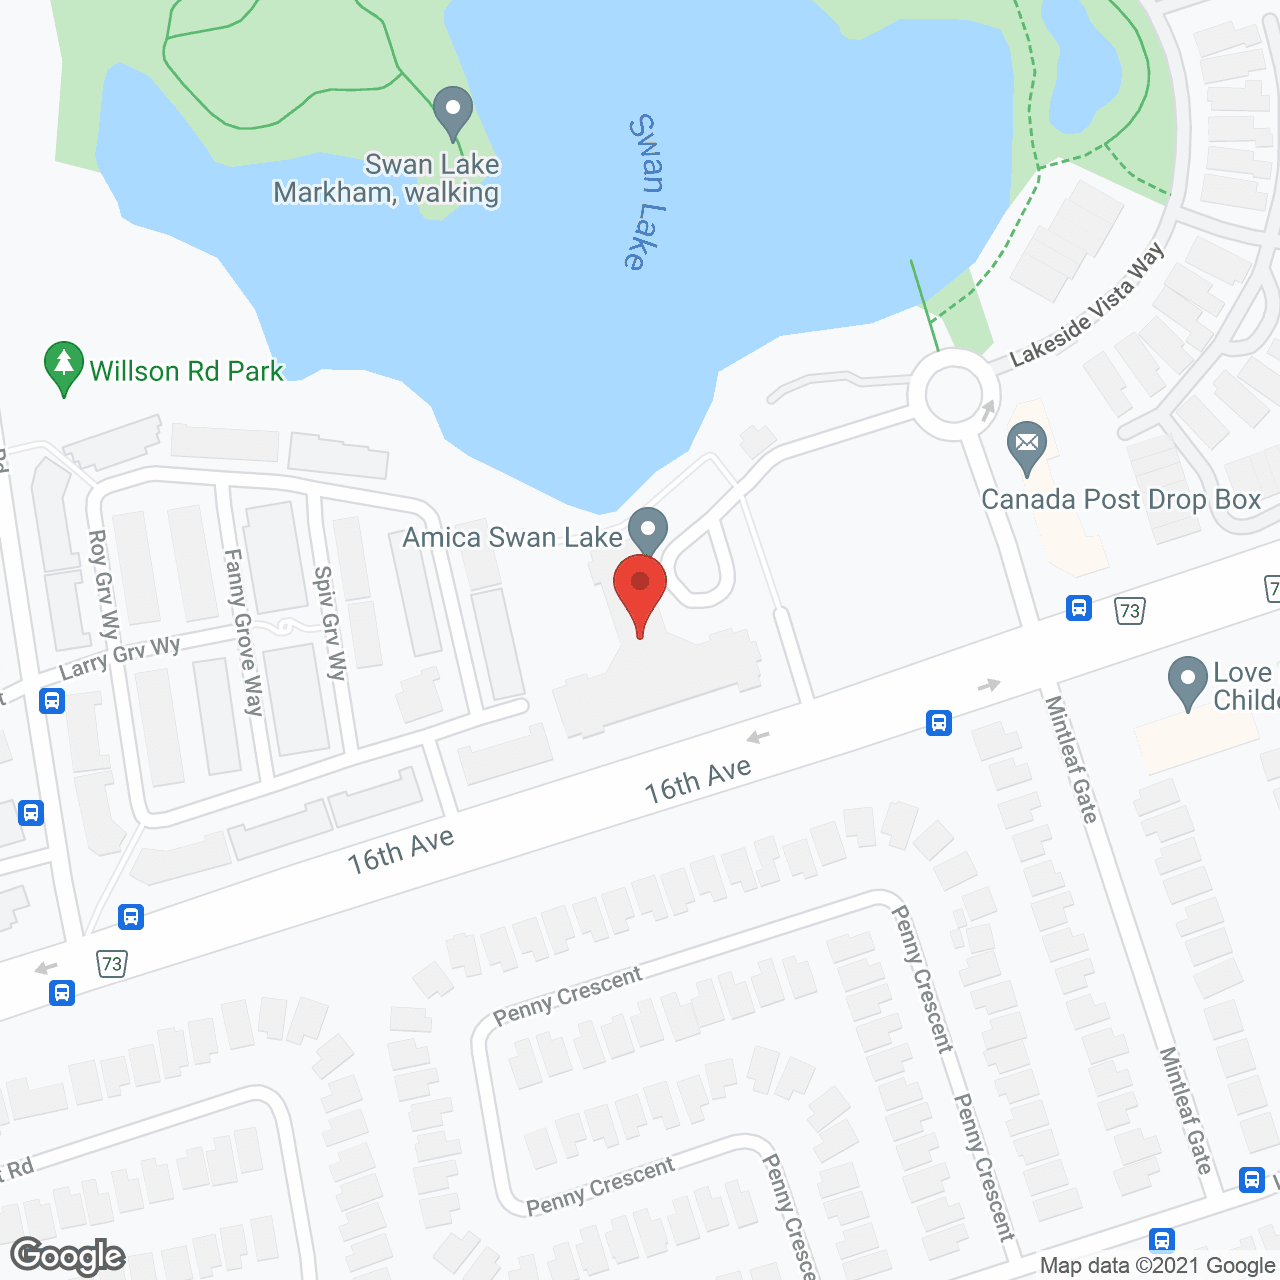 Amica Swan Lake in google map